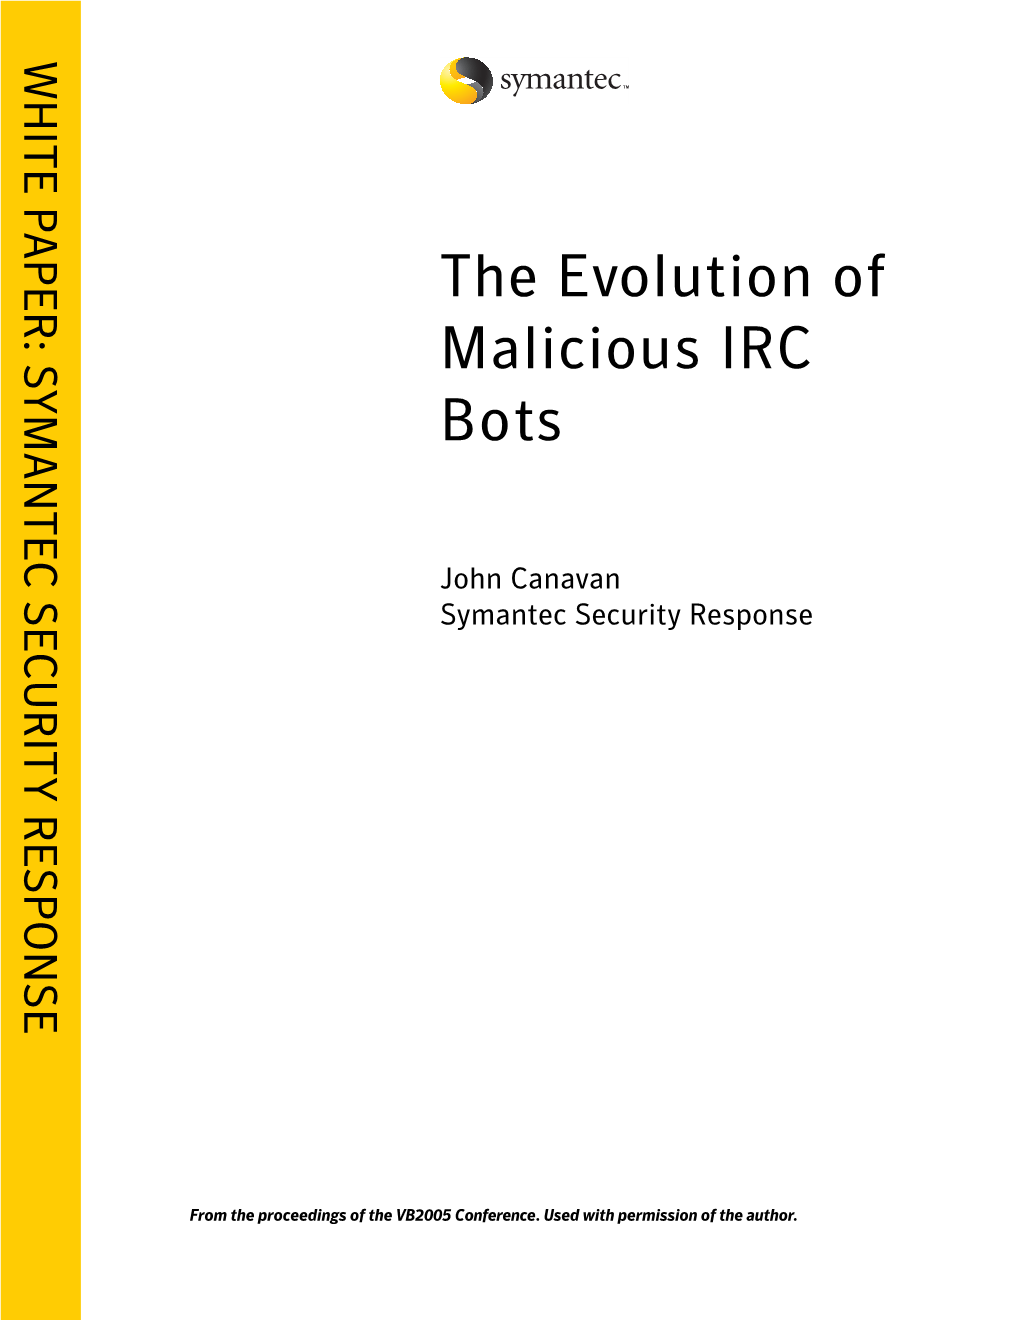 The Evolution of Malicious IRC Bots.Pdf